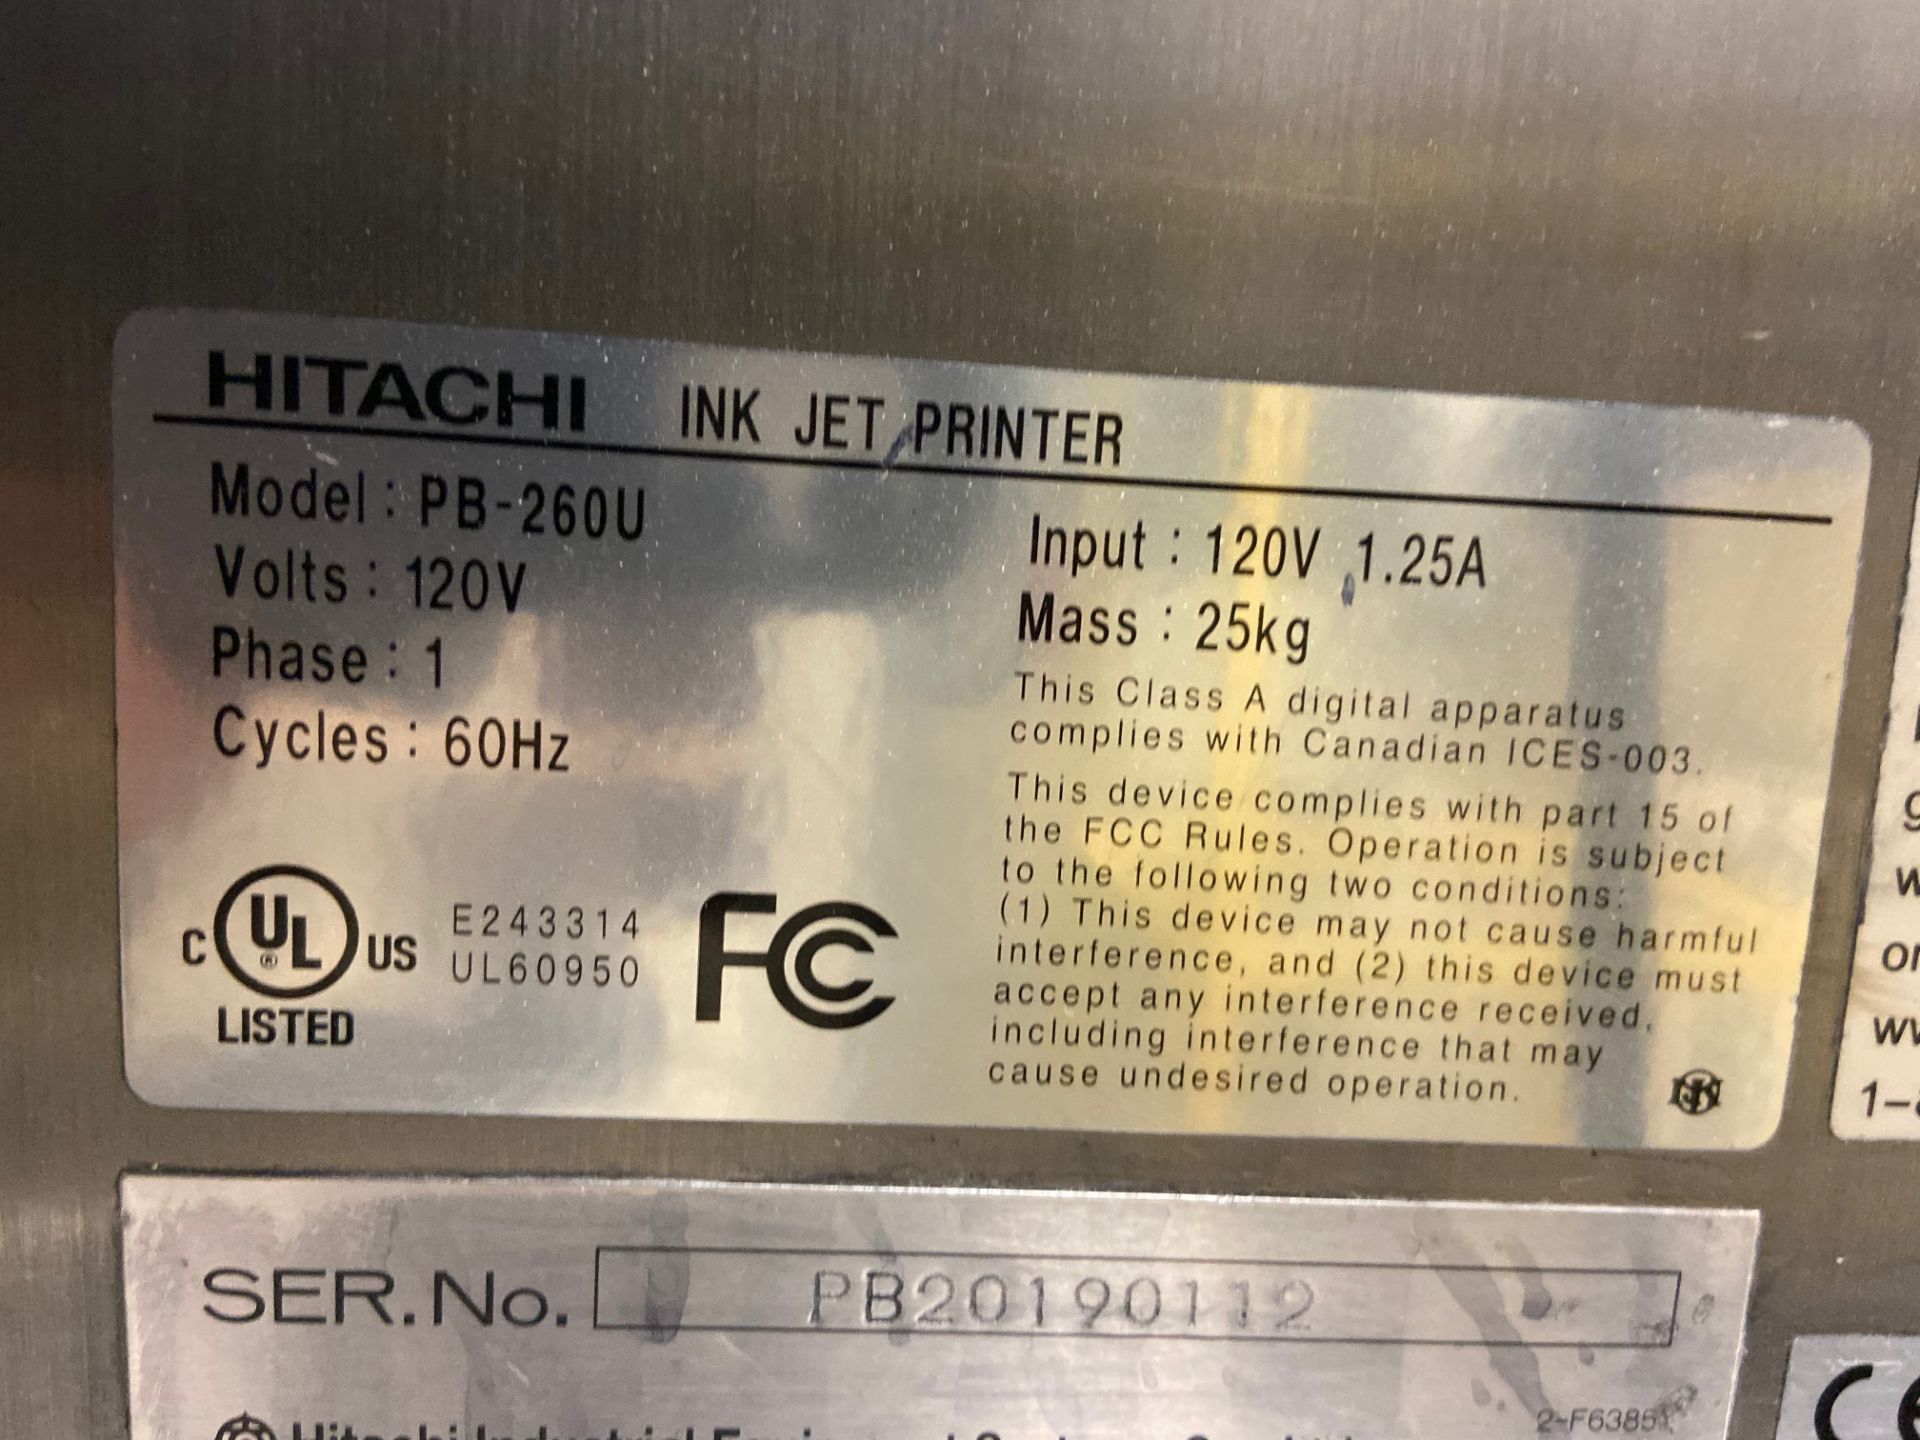 Hitachi Ink Jet Printer, Model# PB-260U, Serial# PB20190112 - Image 3 of 5